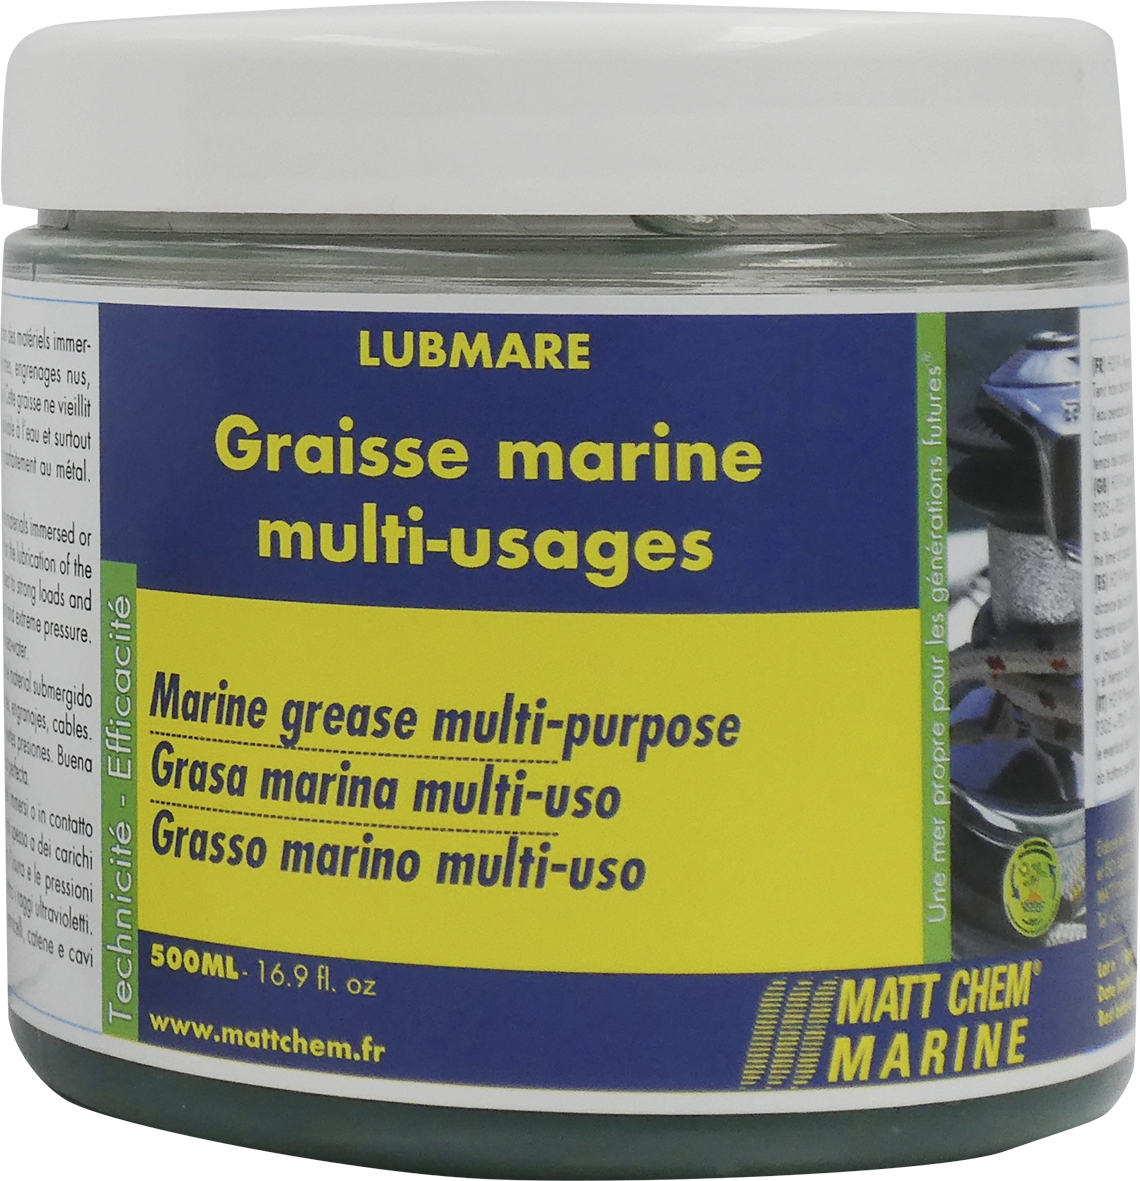 Marine grease Lubmare